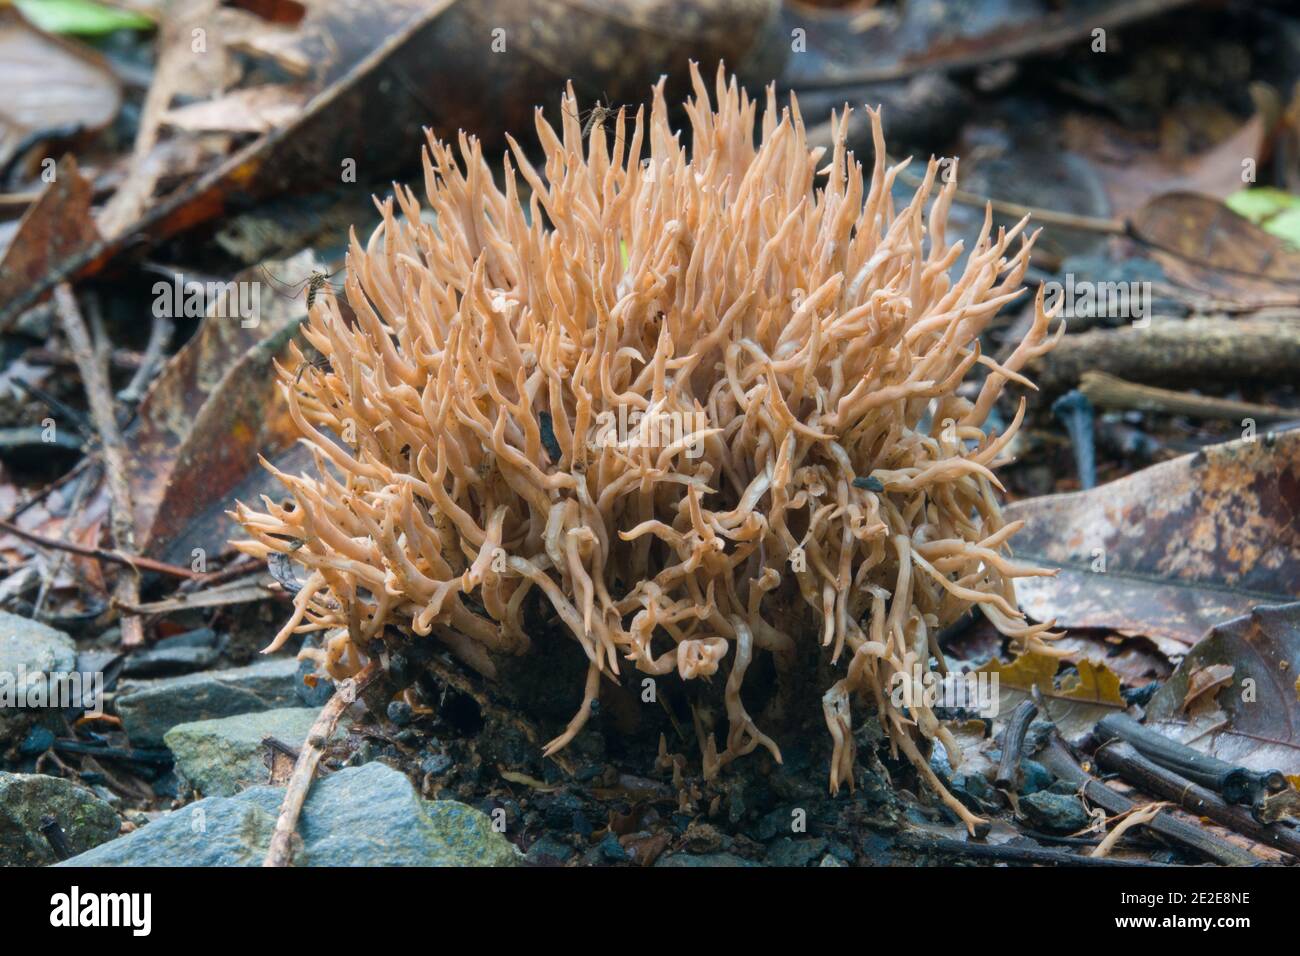 A Coral Fungi (Ramaria species) photographed at Diwan, Daintree National Park, Queensland, Australia. Stock Photo